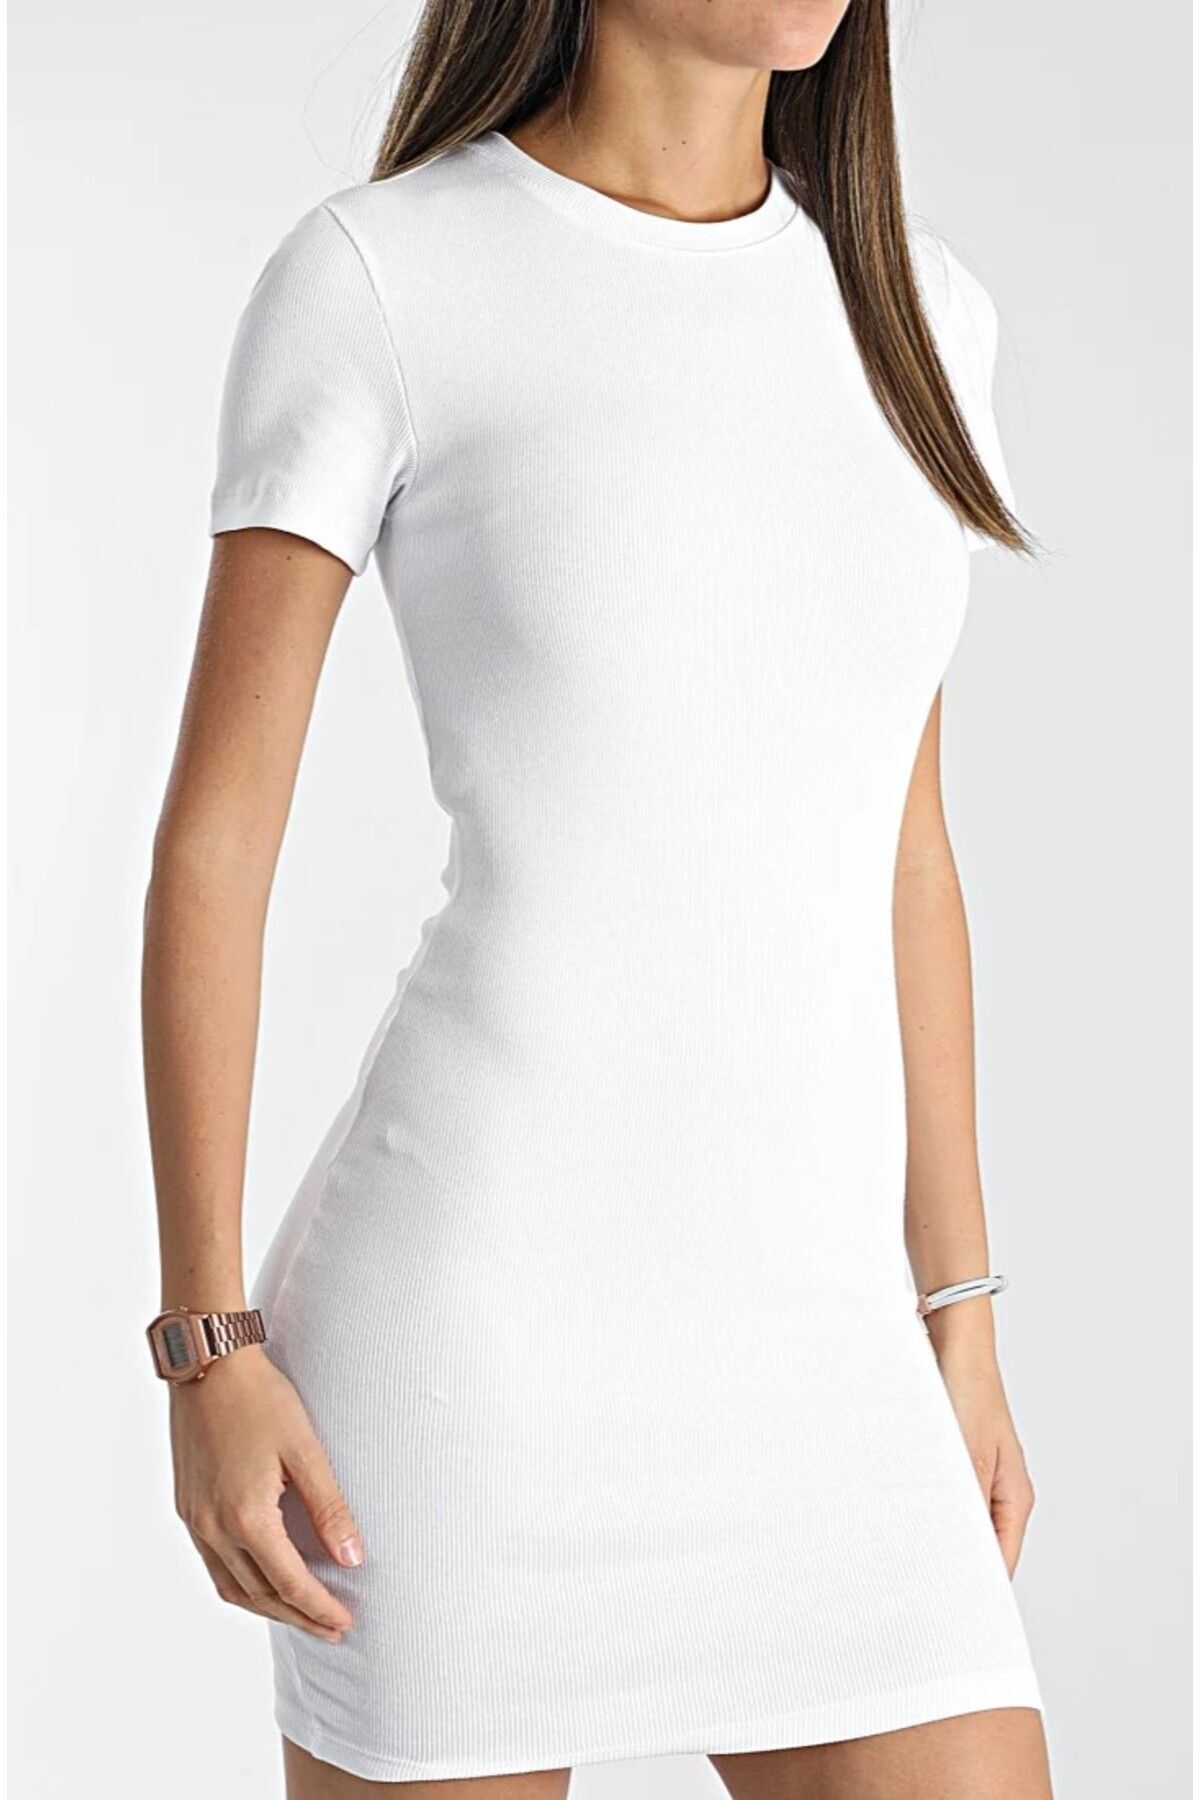 KaSheHa Beyaz Kaşkorse Kumaş Vücuda Oturan Fitilli Full Esnek Mini Elbise 85 Cm